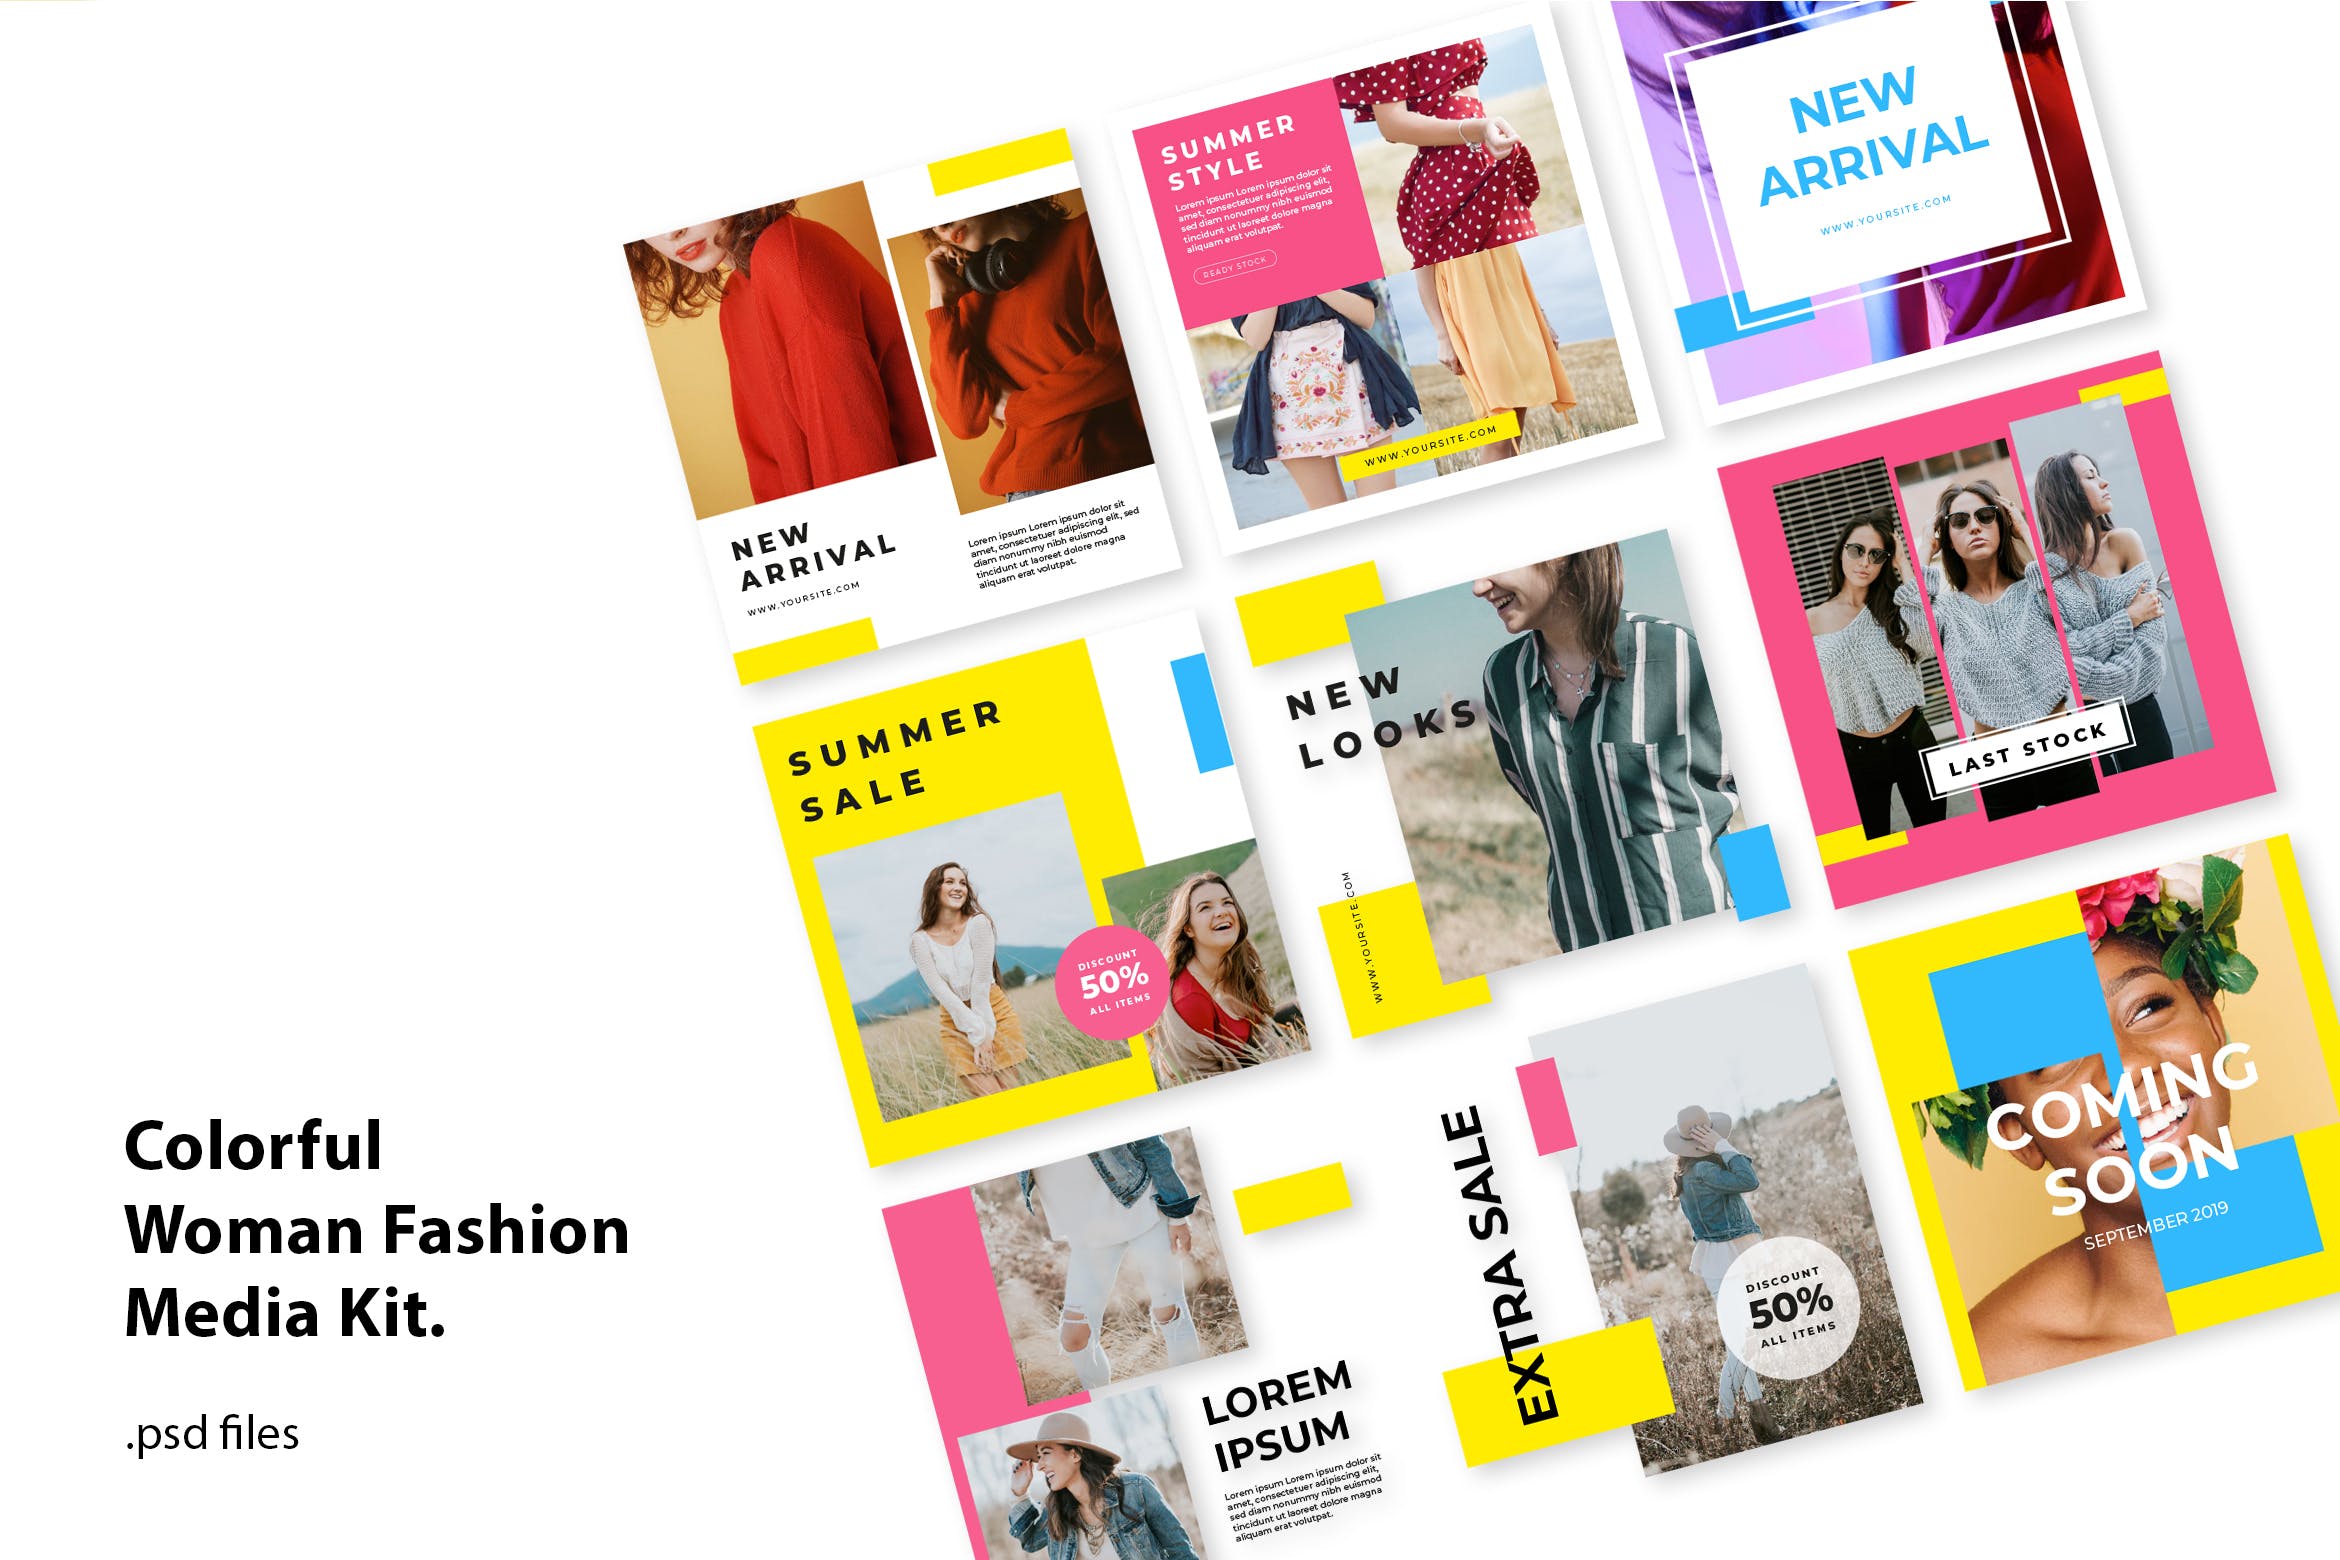 适合时尚品牌营销的社交媒体设计素材包 Social Media Kit Colorful Fashion Woman插图